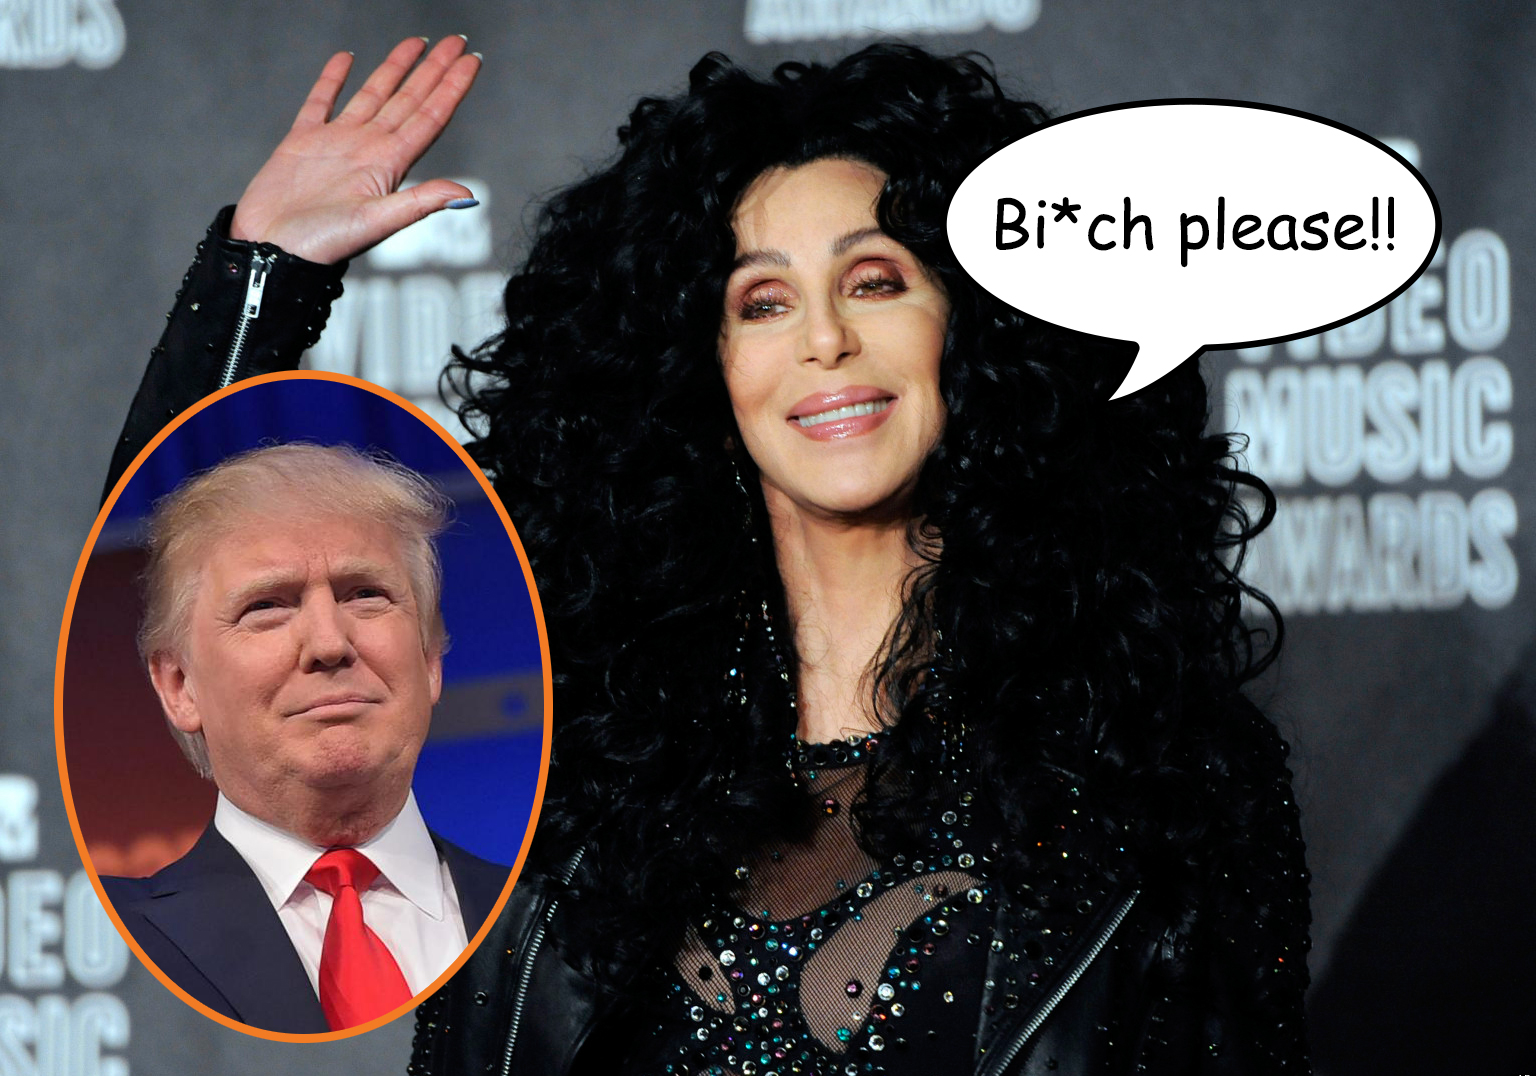 Cher Making Fun Of Donald Trump On Twitter